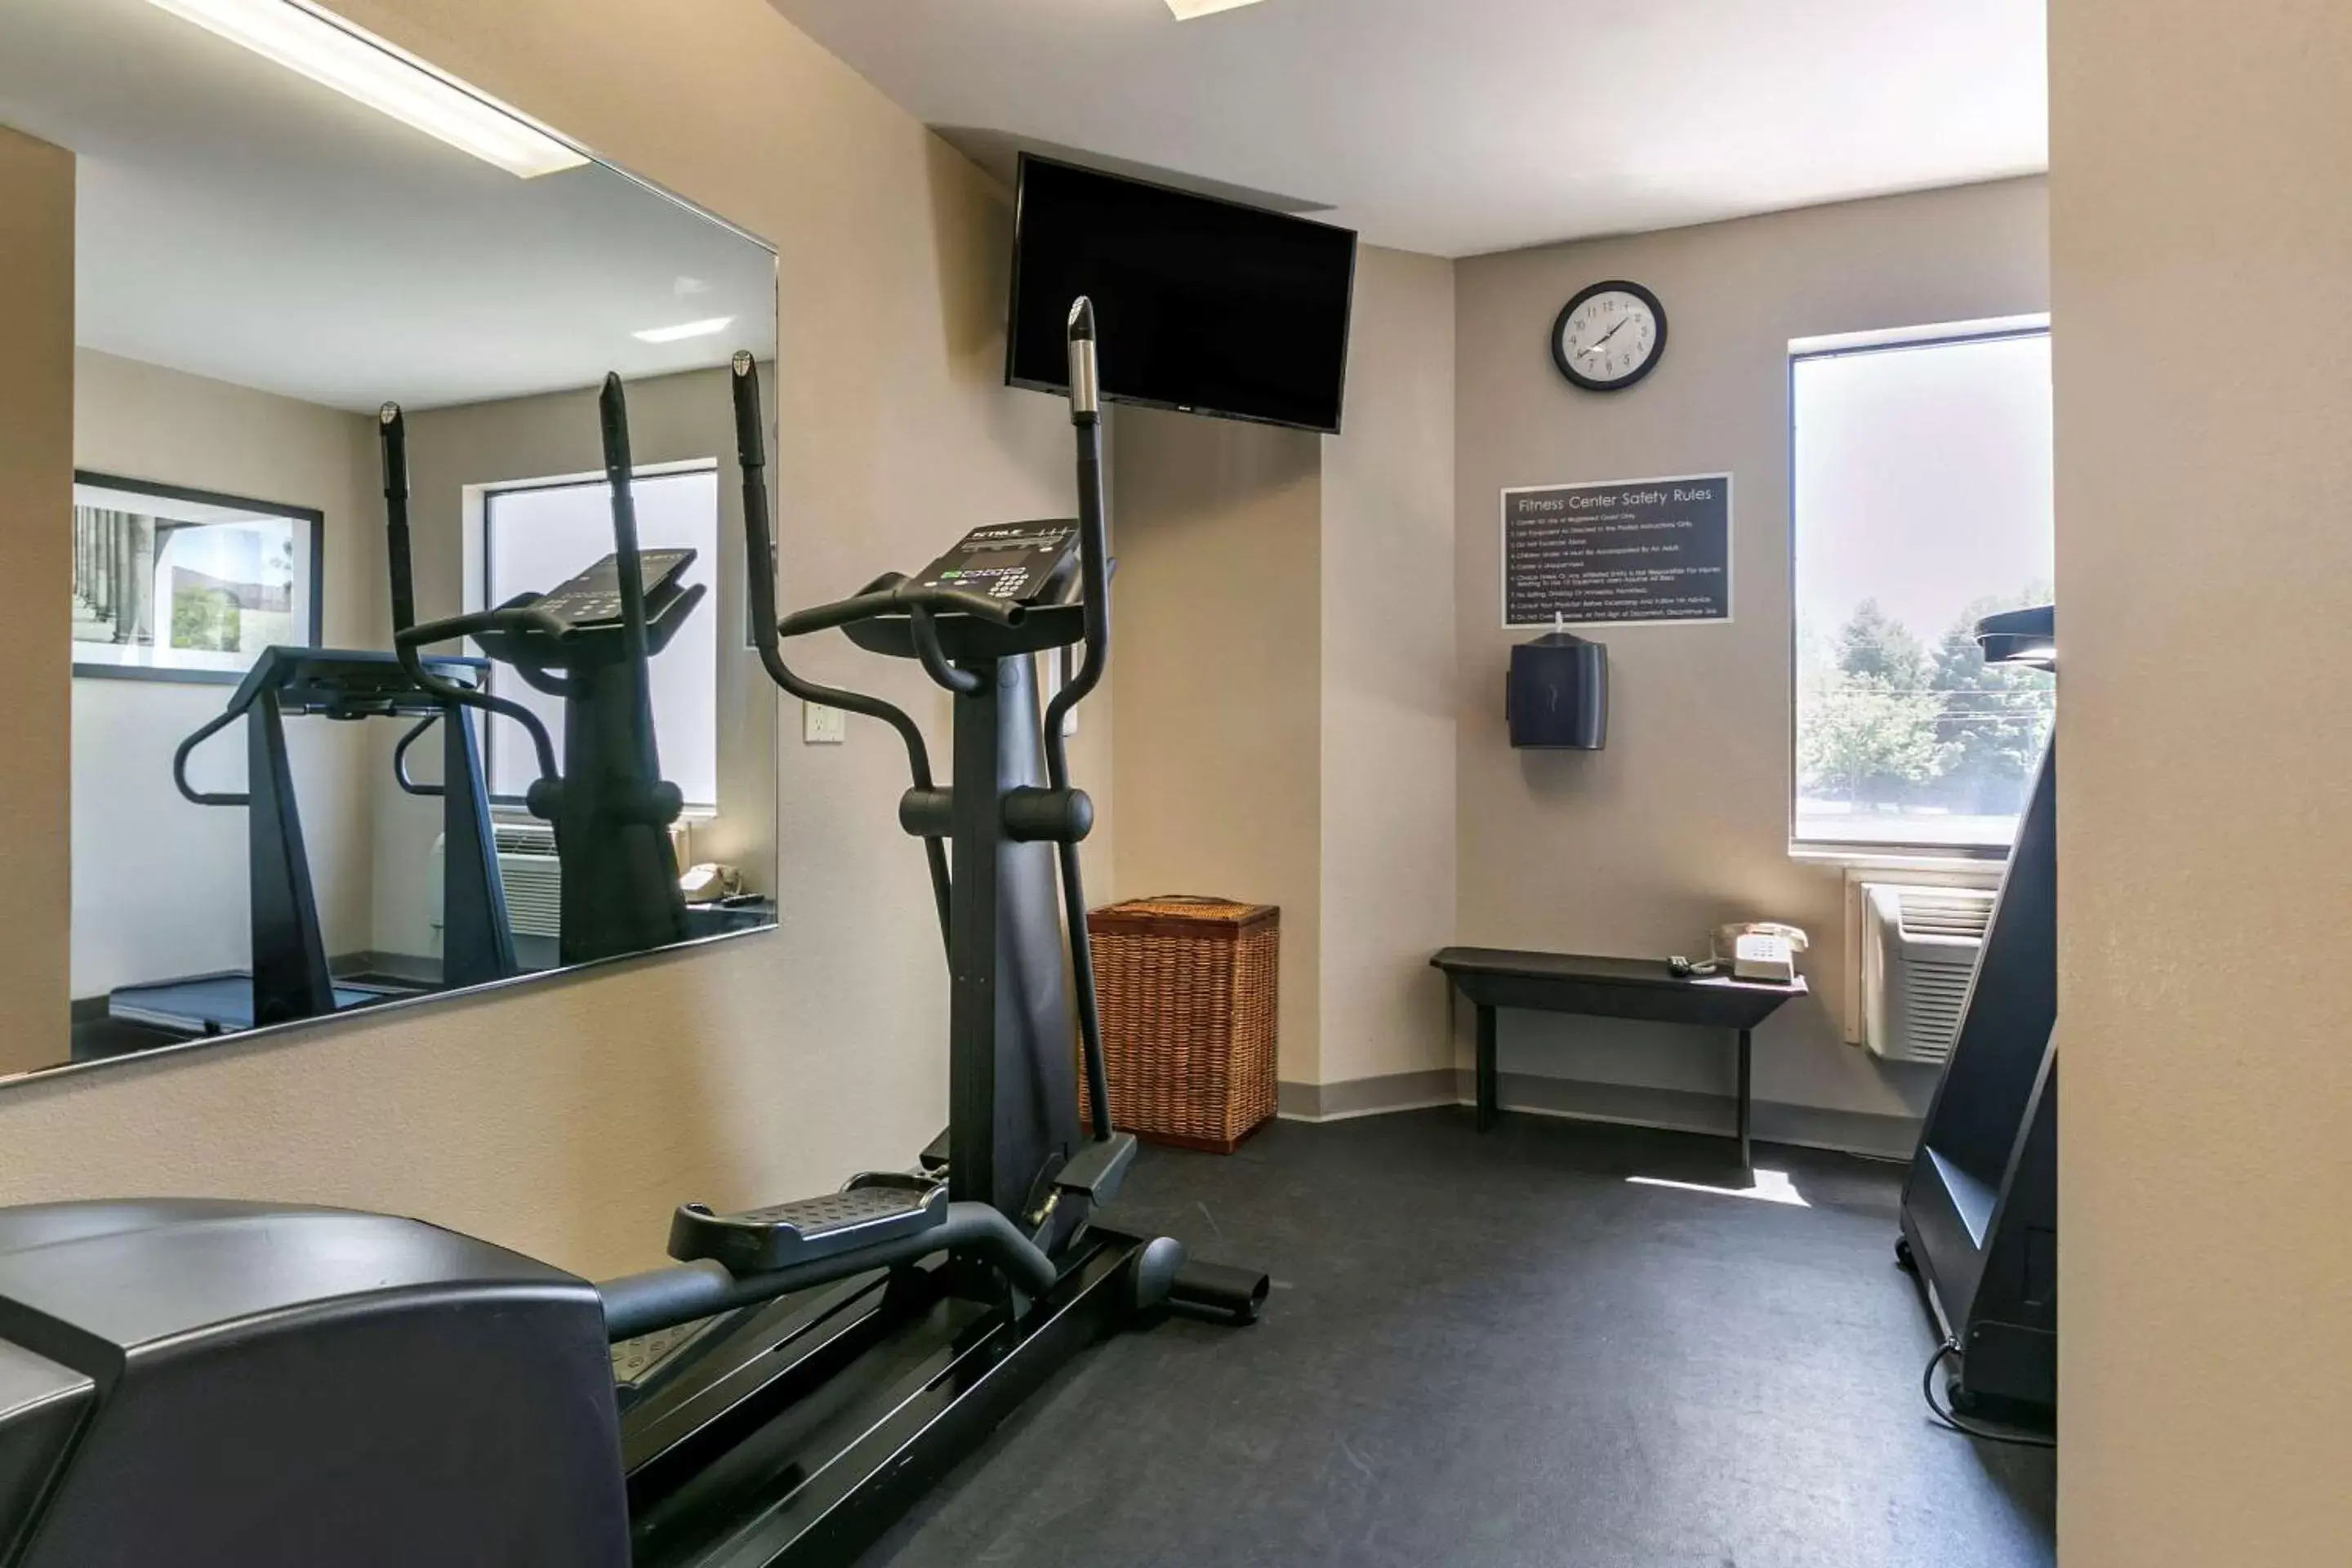 Fitness centre/facilities, Fitness Center/Facilities in Sleep Inn Allentown-Fogelsville